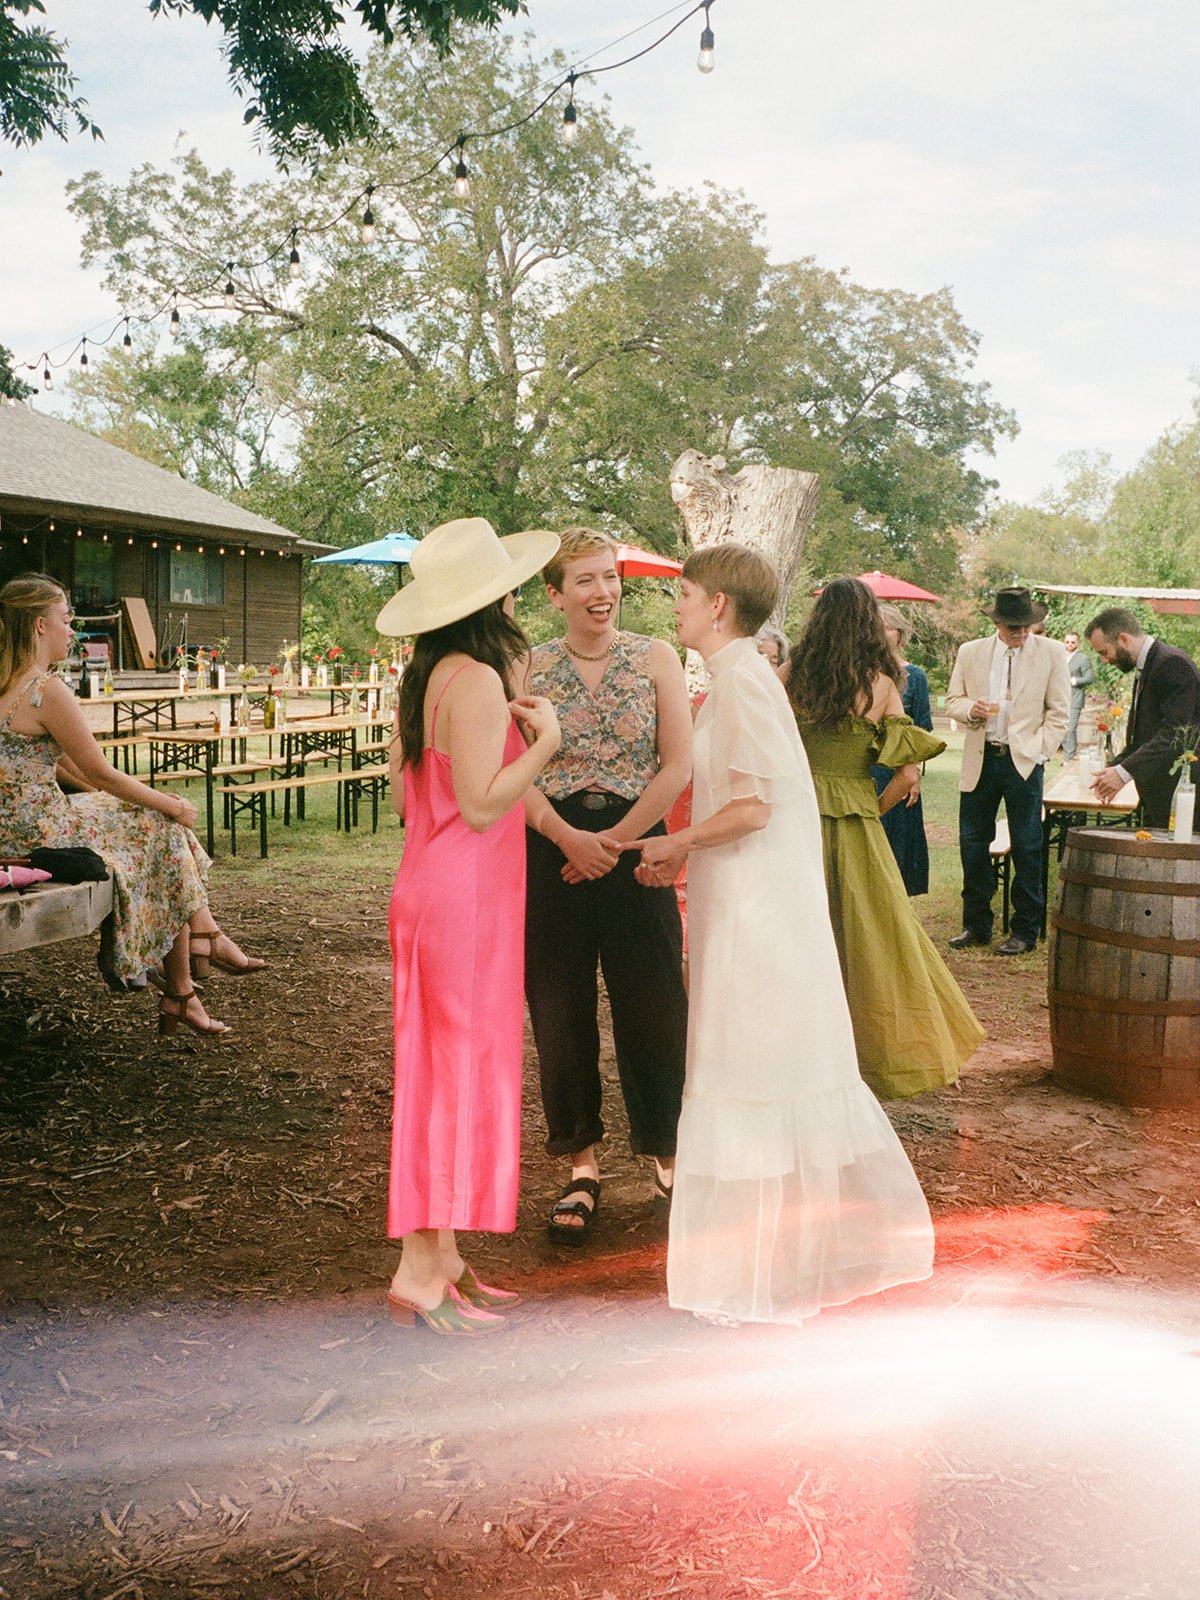 Best-Film-35mm-Austin-Wedding-Photographer-the-Long-time-Super8-113.jpg